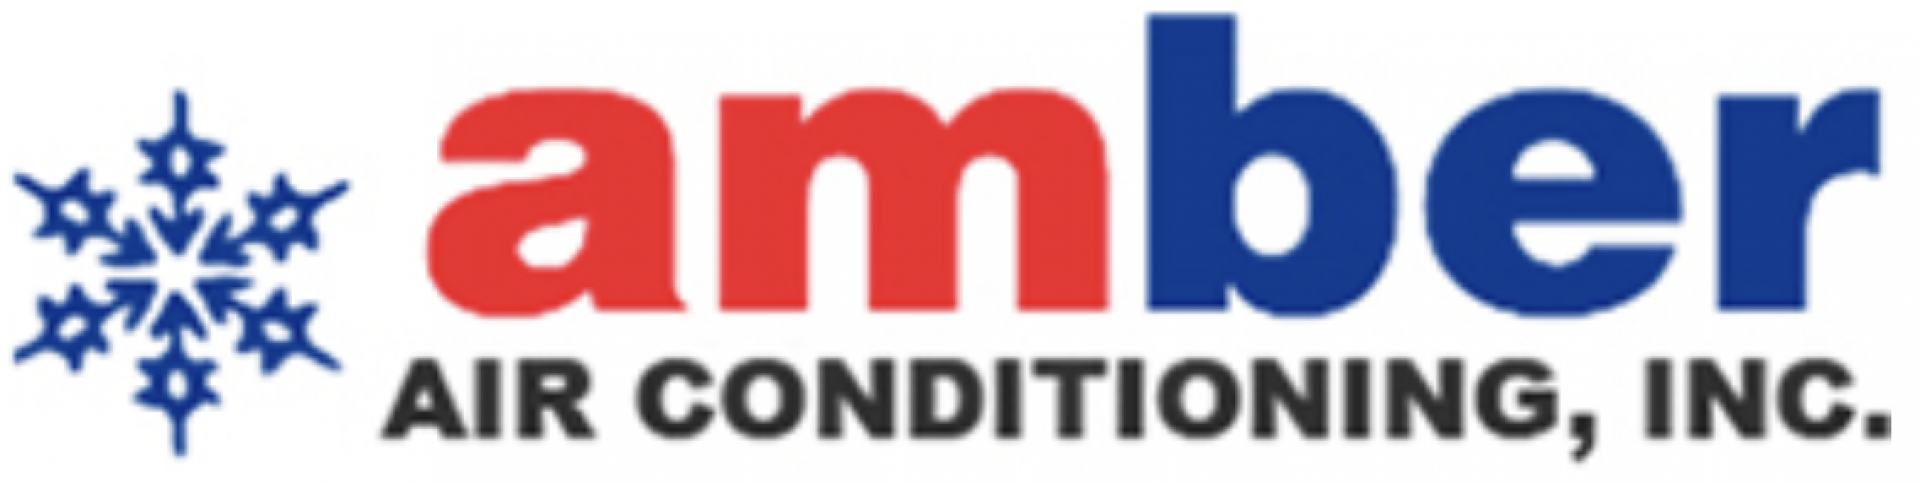 Amber Air Conditioning, Inc. company logo